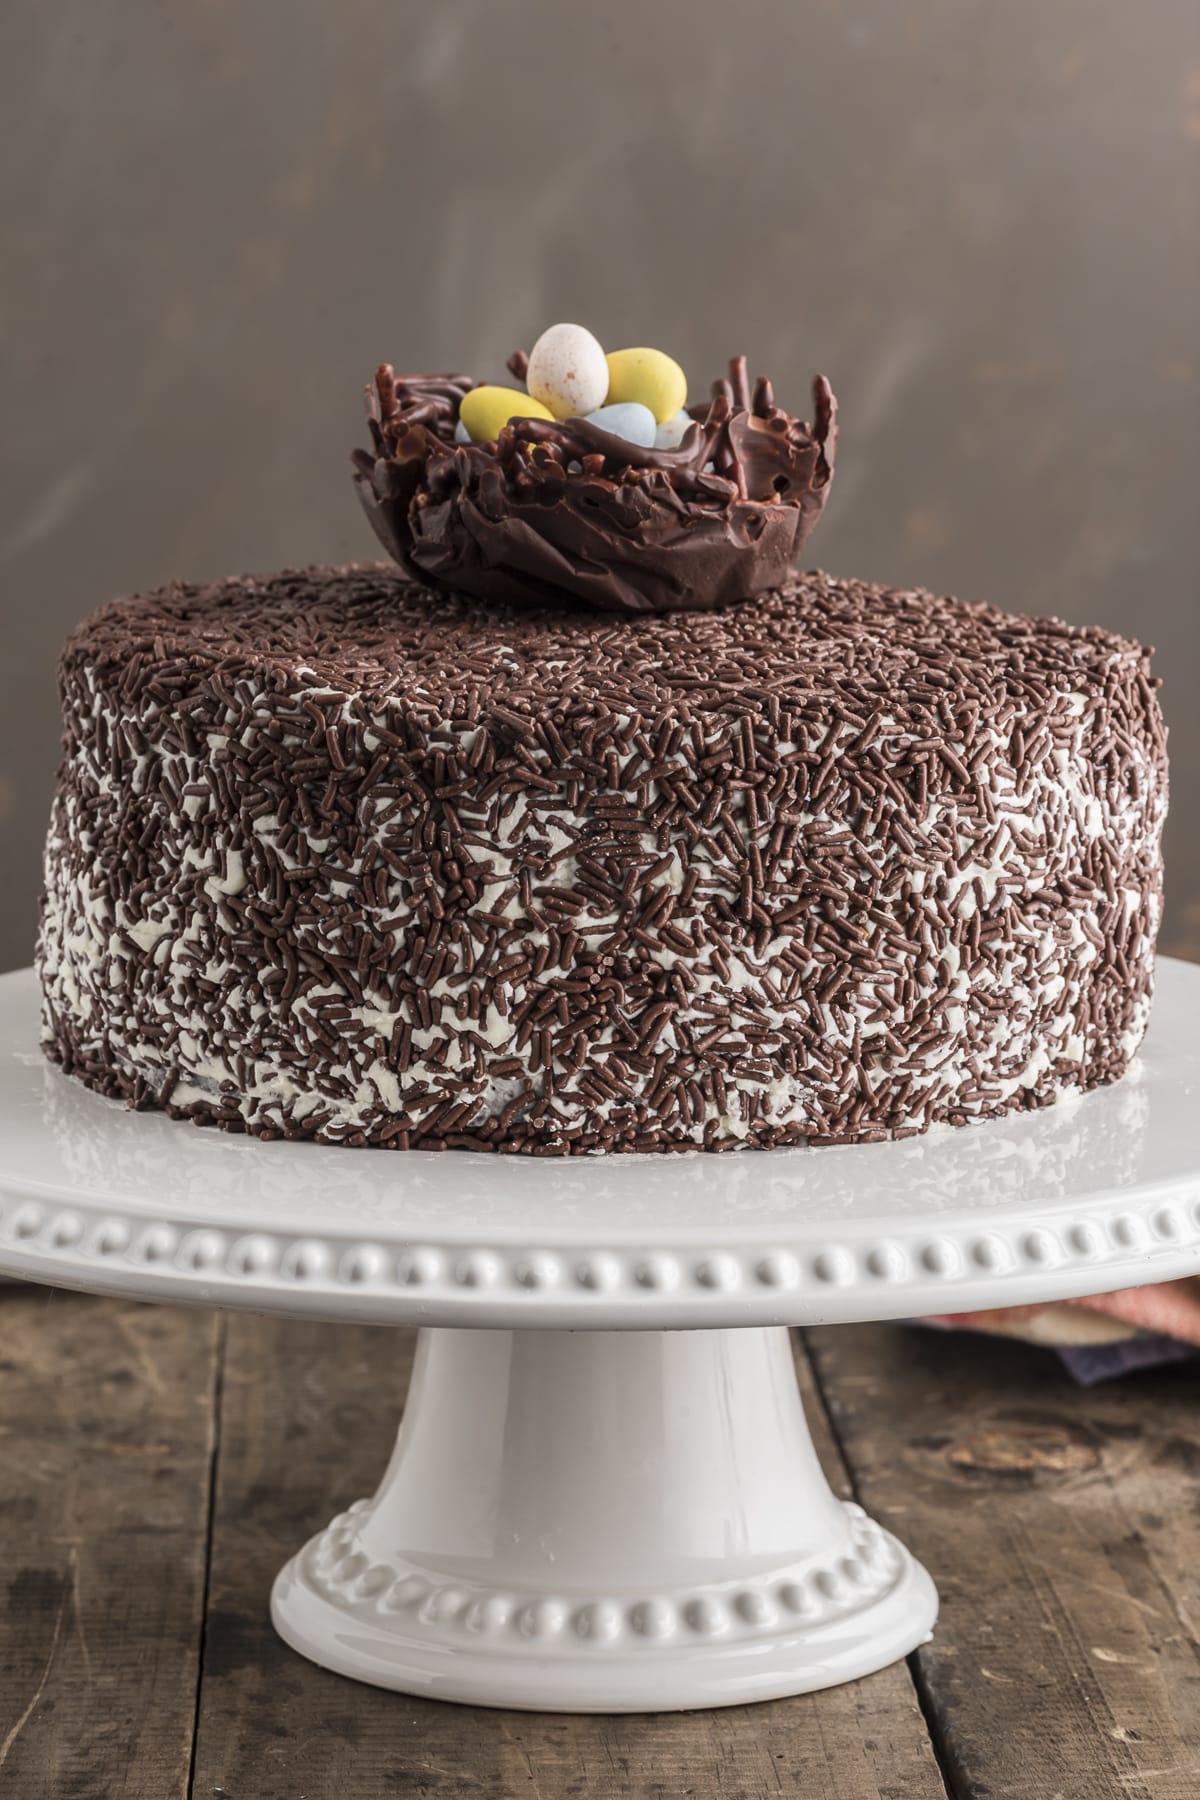 Chocolate Easter Egg Cake